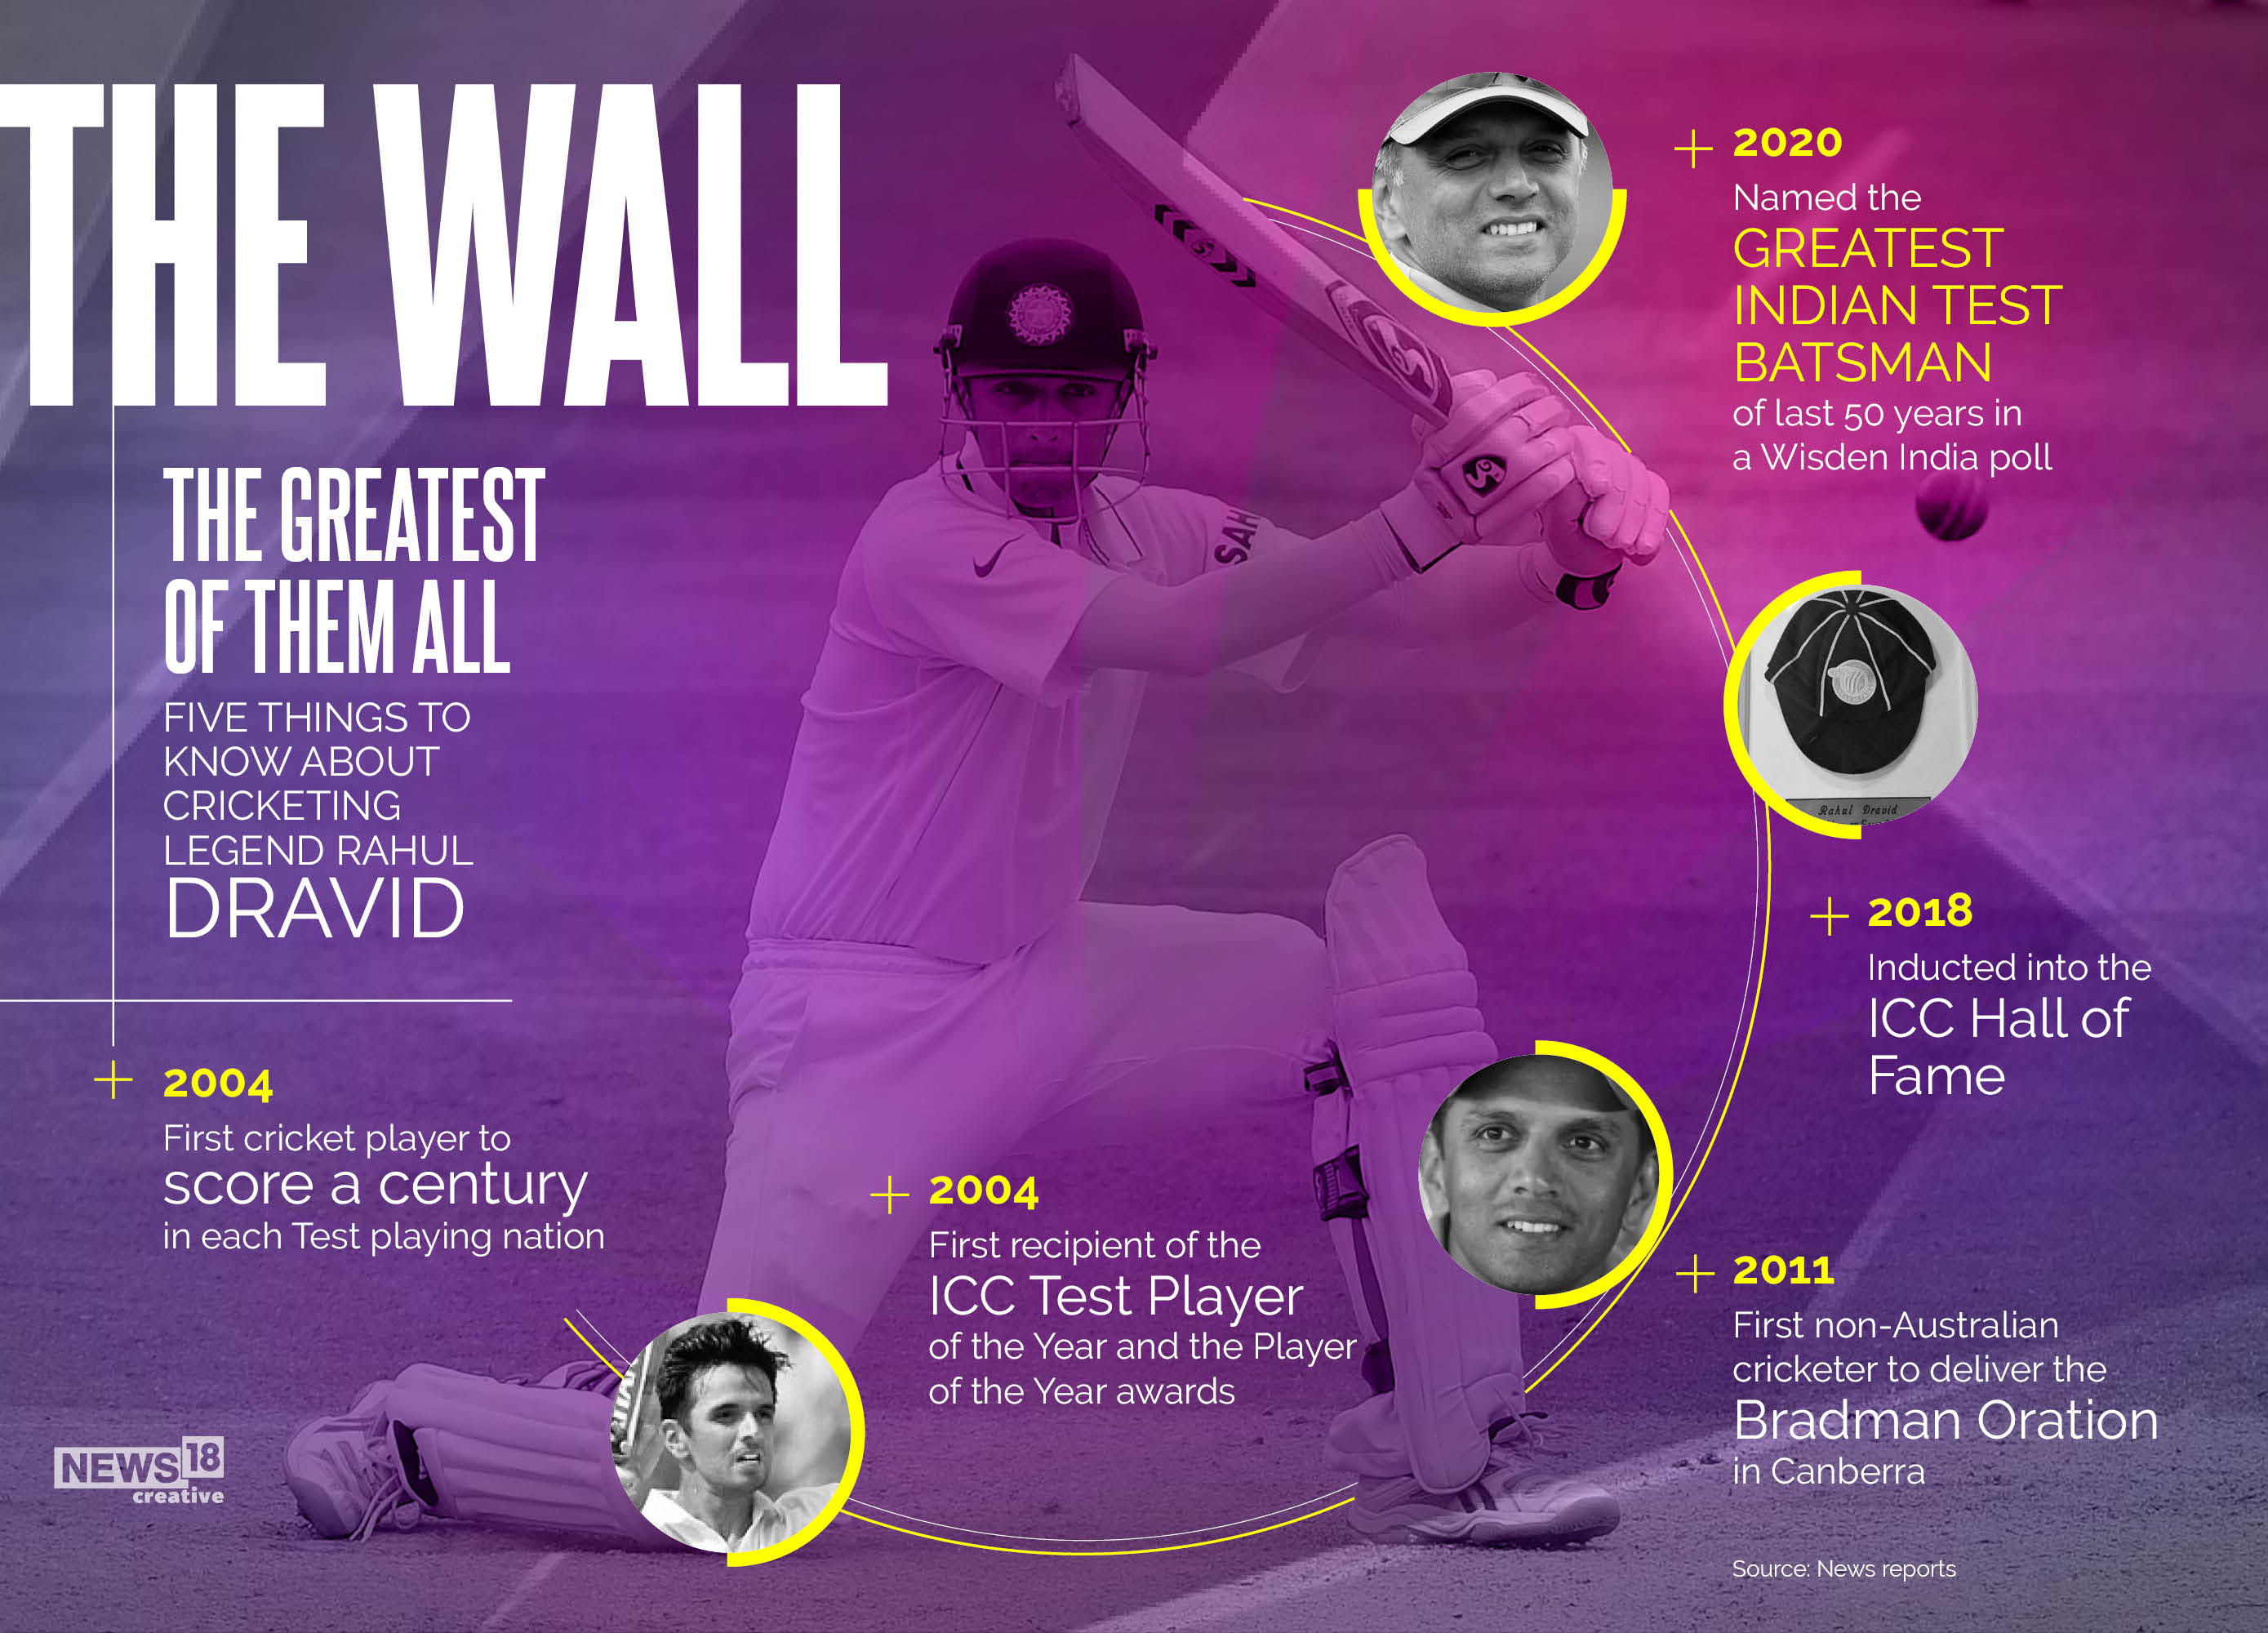 Five things that make Rahul Dravid the greatest batsman